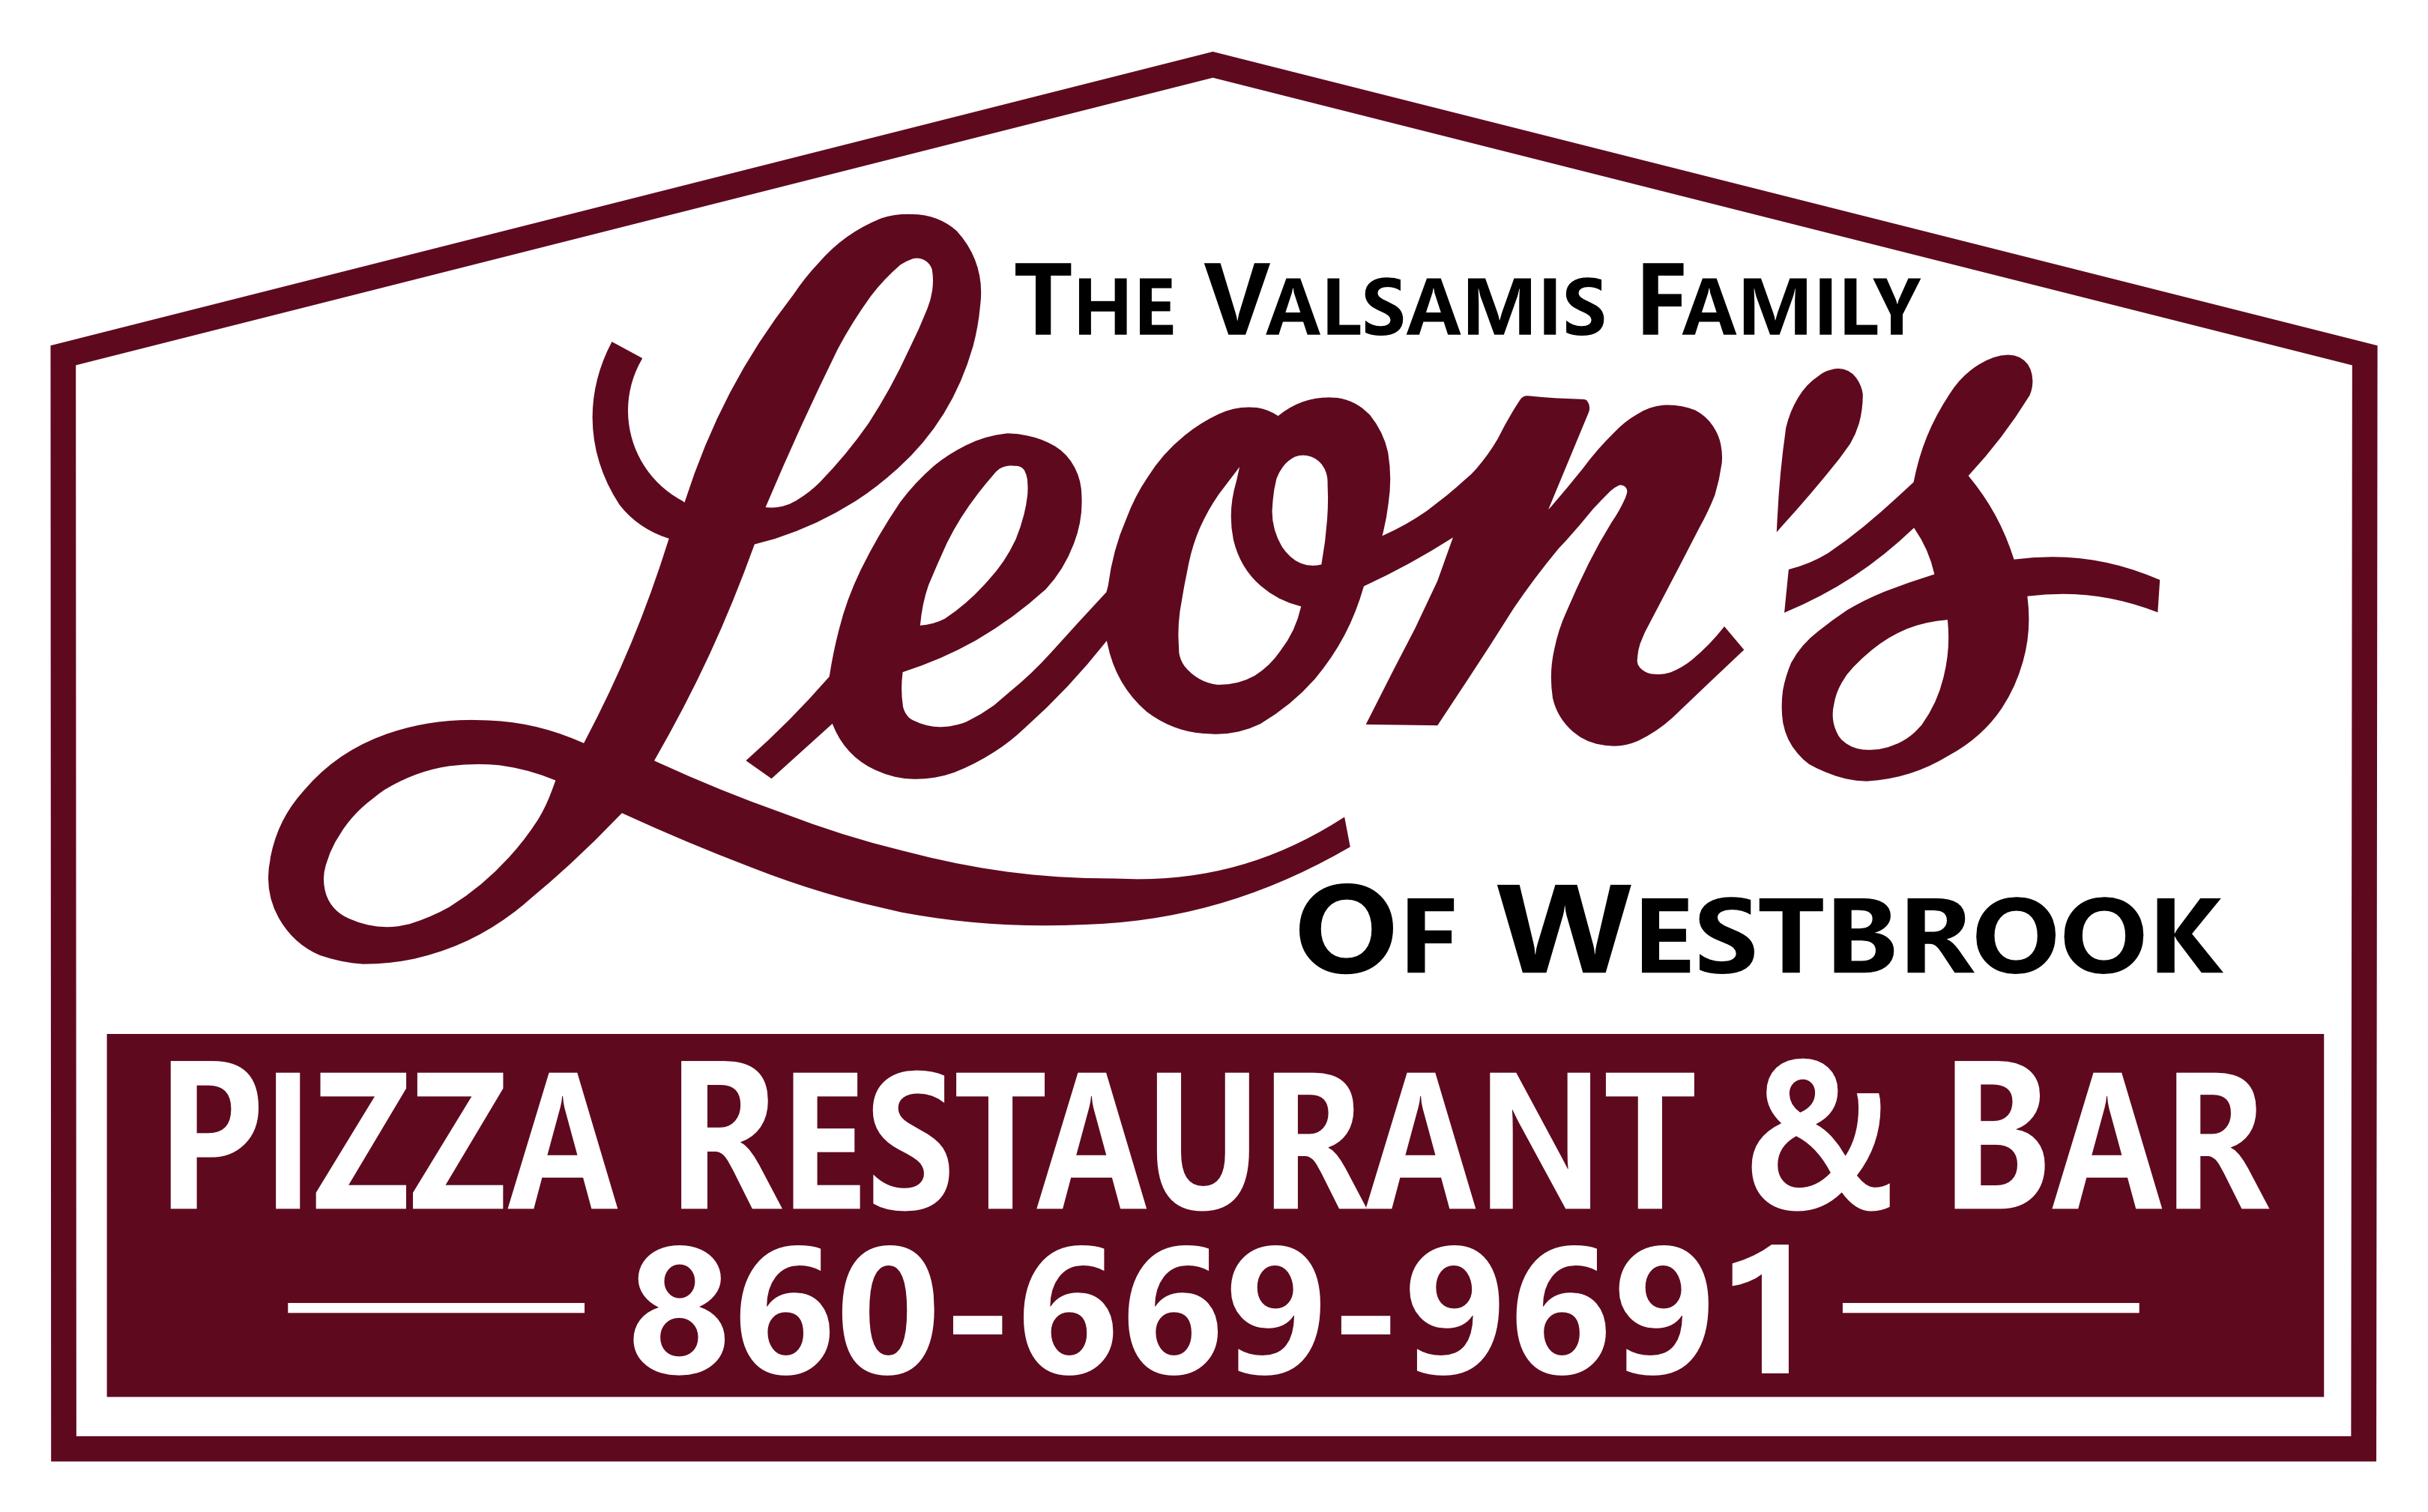 Leon's Pizza Restaurant2 Homepage